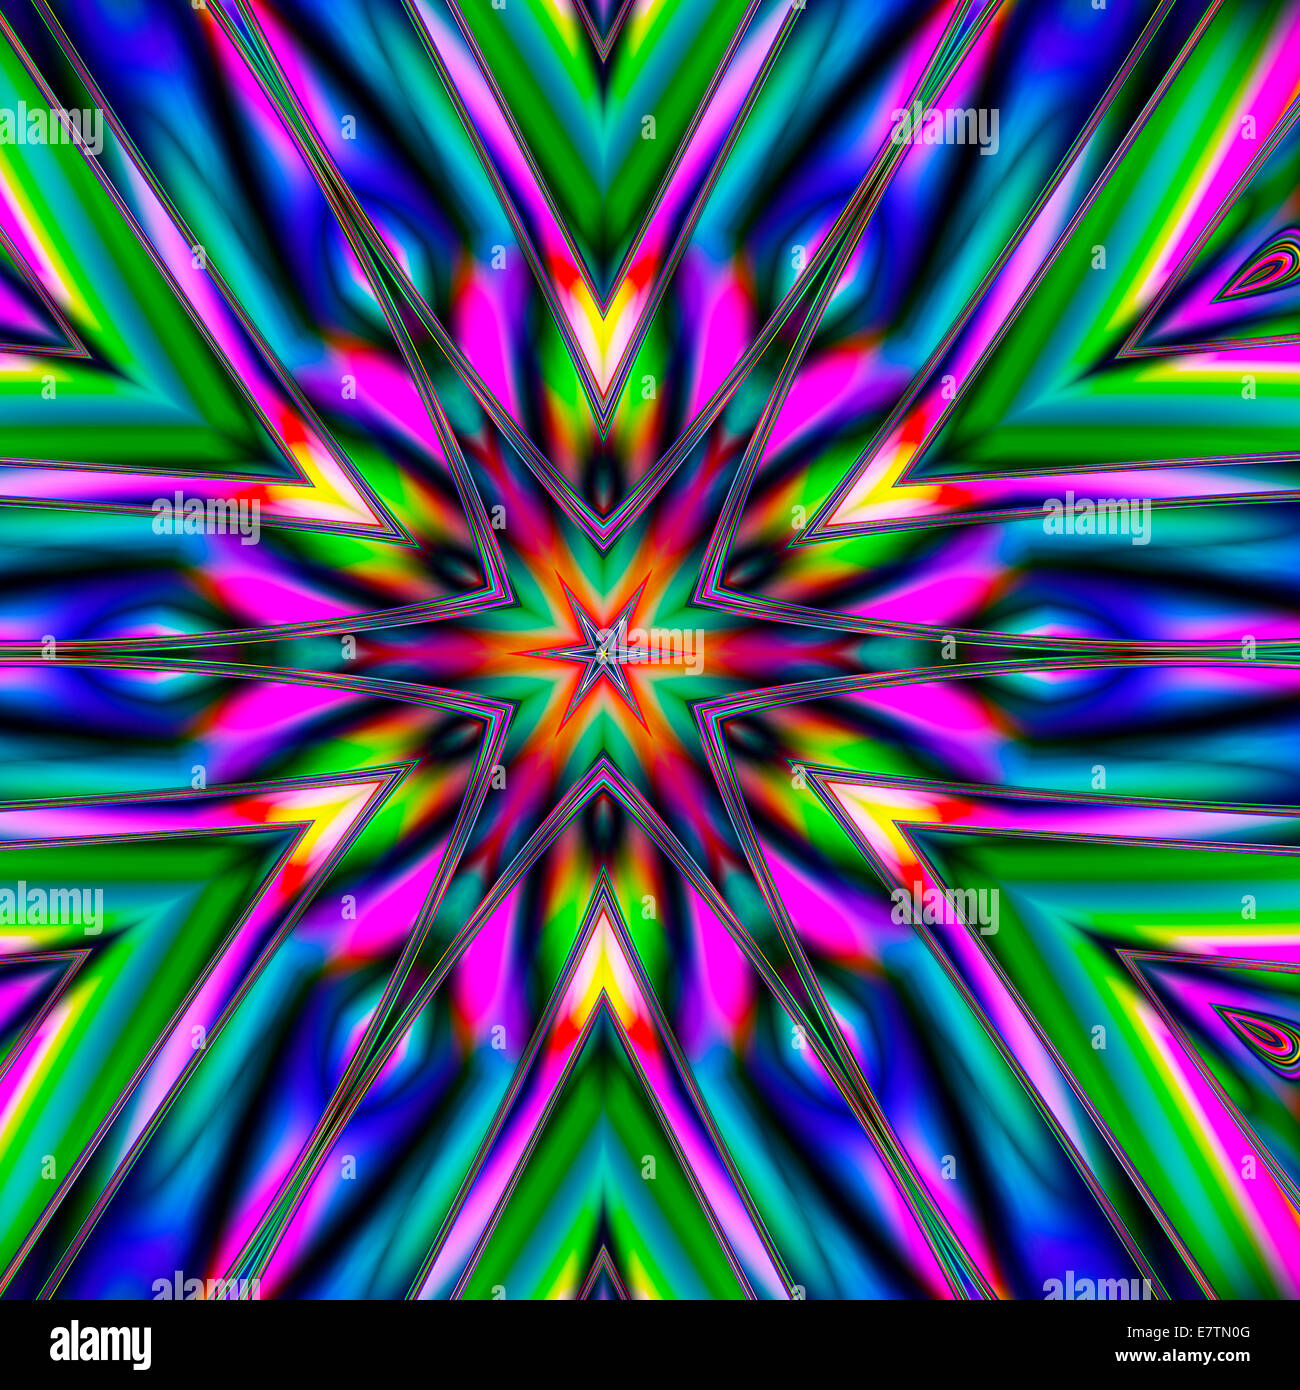 Psychedelic abstract pattern, l'oeuvre de l'ordinateur. Banque D'Images